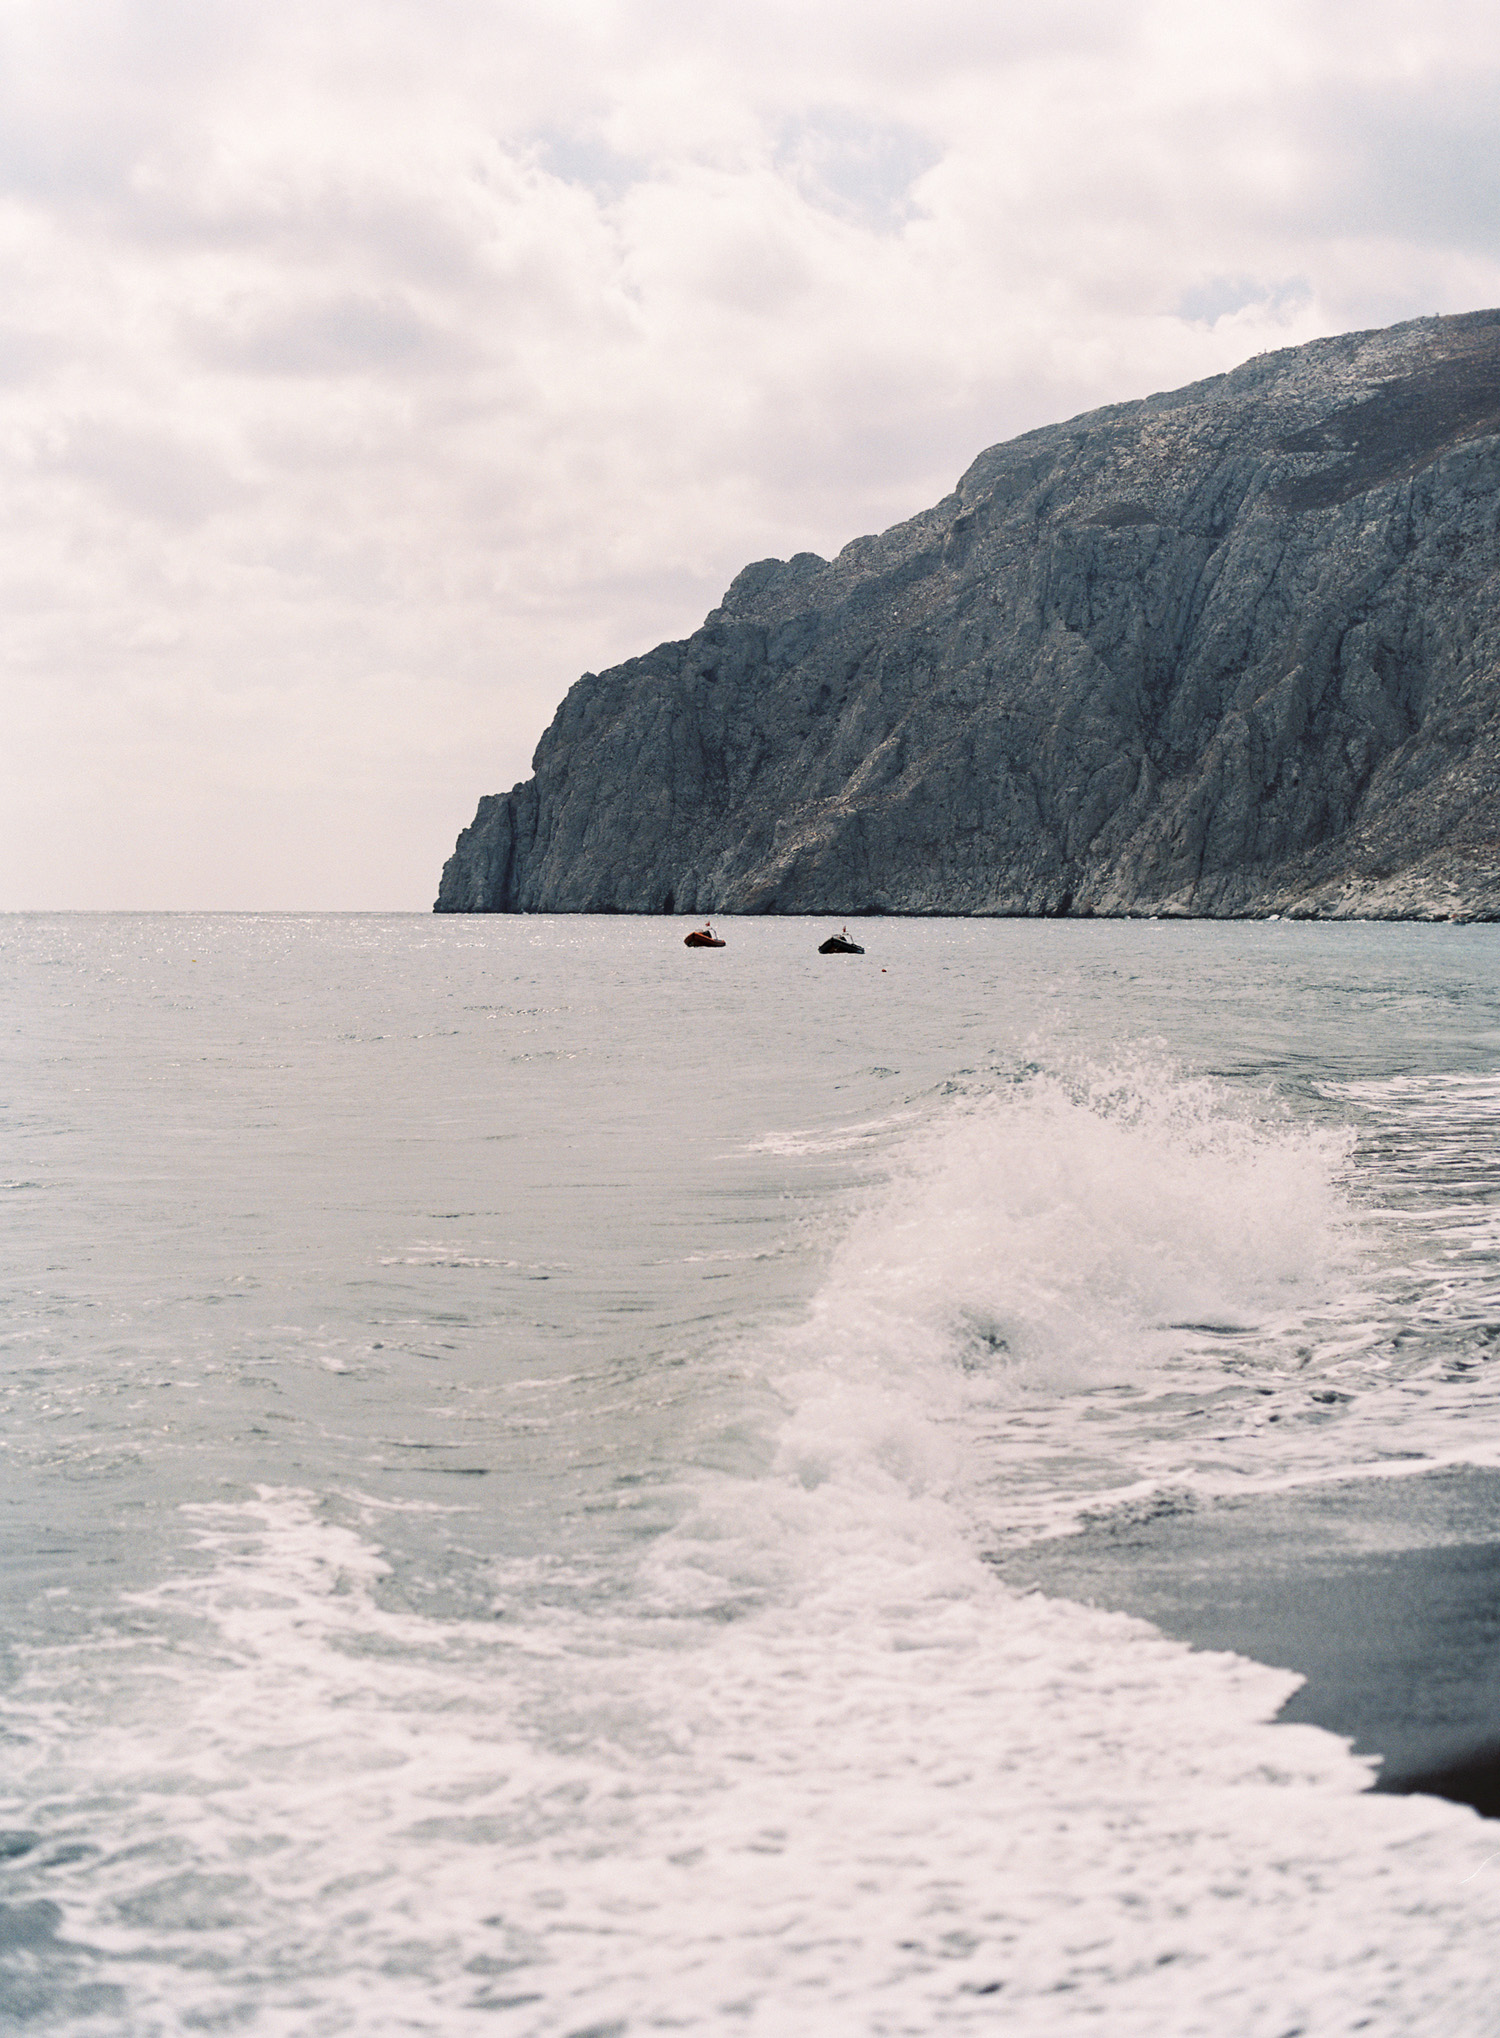 kerstin-lillikadphotography-travel-destinationphotography-creativetravel-artists-filmphotography-unearthingtc-ocean-cliff-waves.jpg